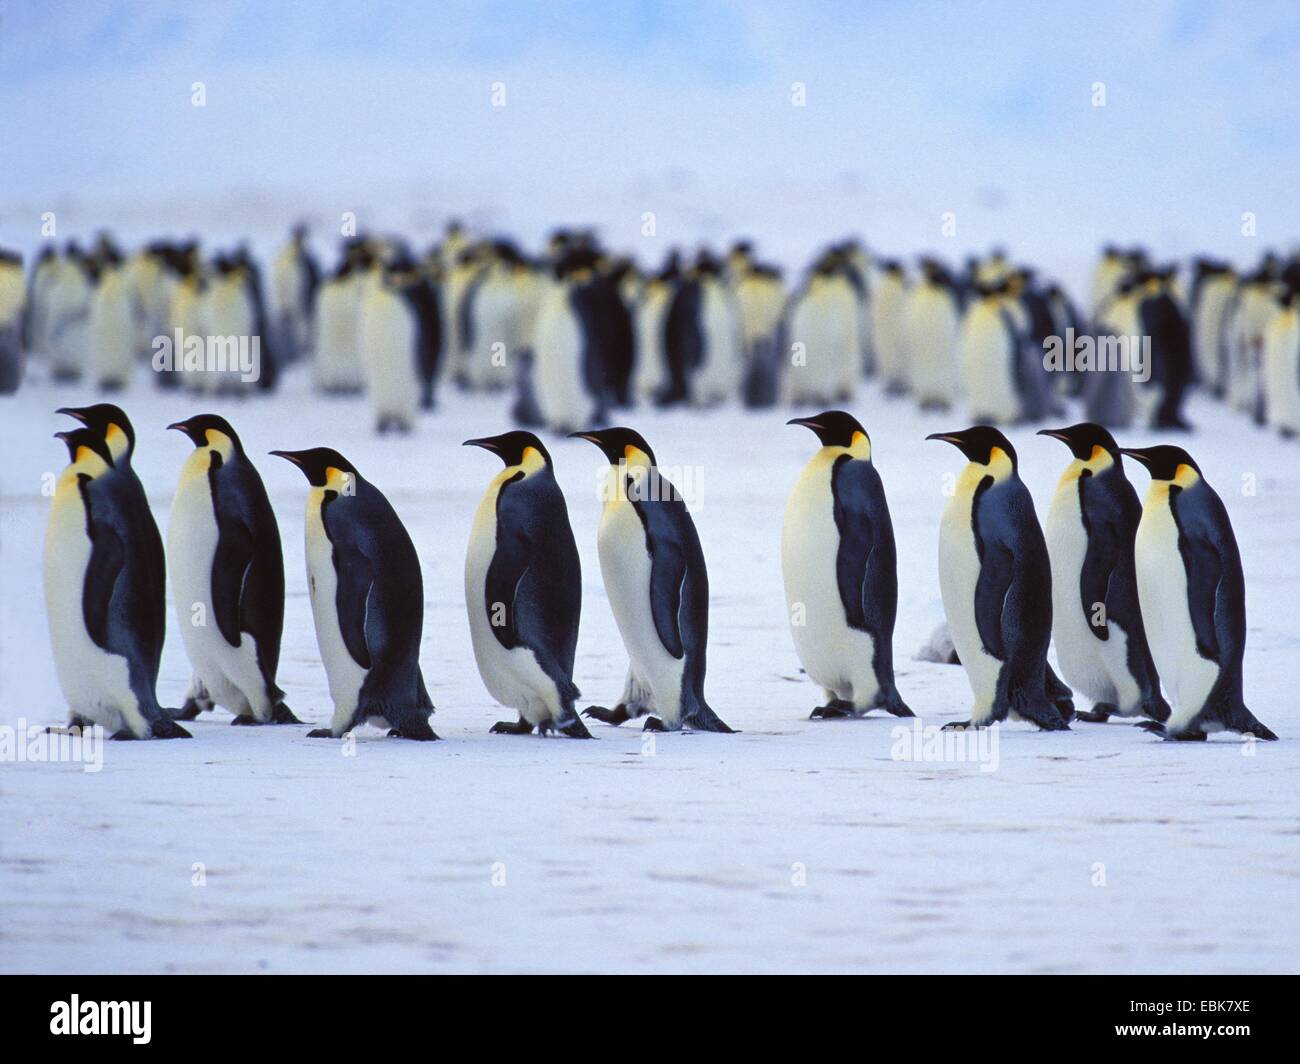 Pinguino imperatore (Aptenodytes forsteri), Pinguini imperatore in una fila, Antartide Foto Stock